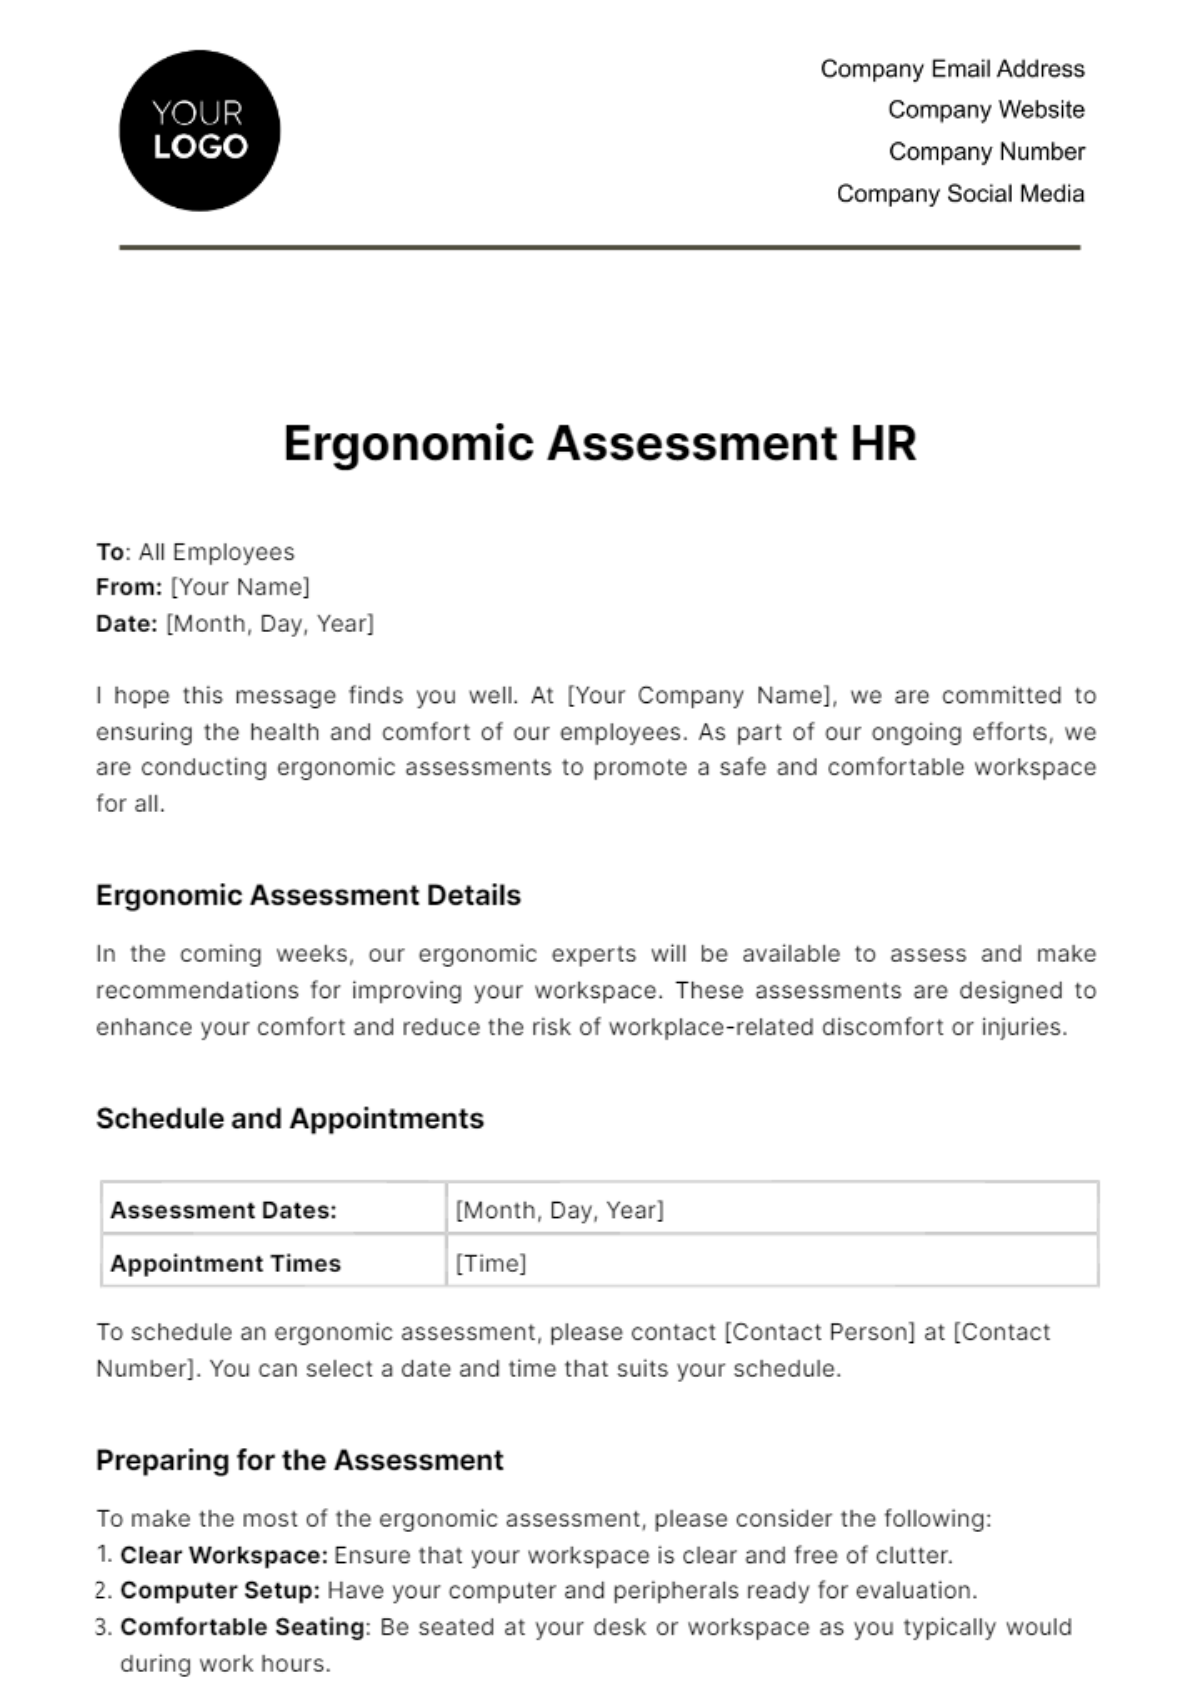 Ergonomic Assessment HR Template